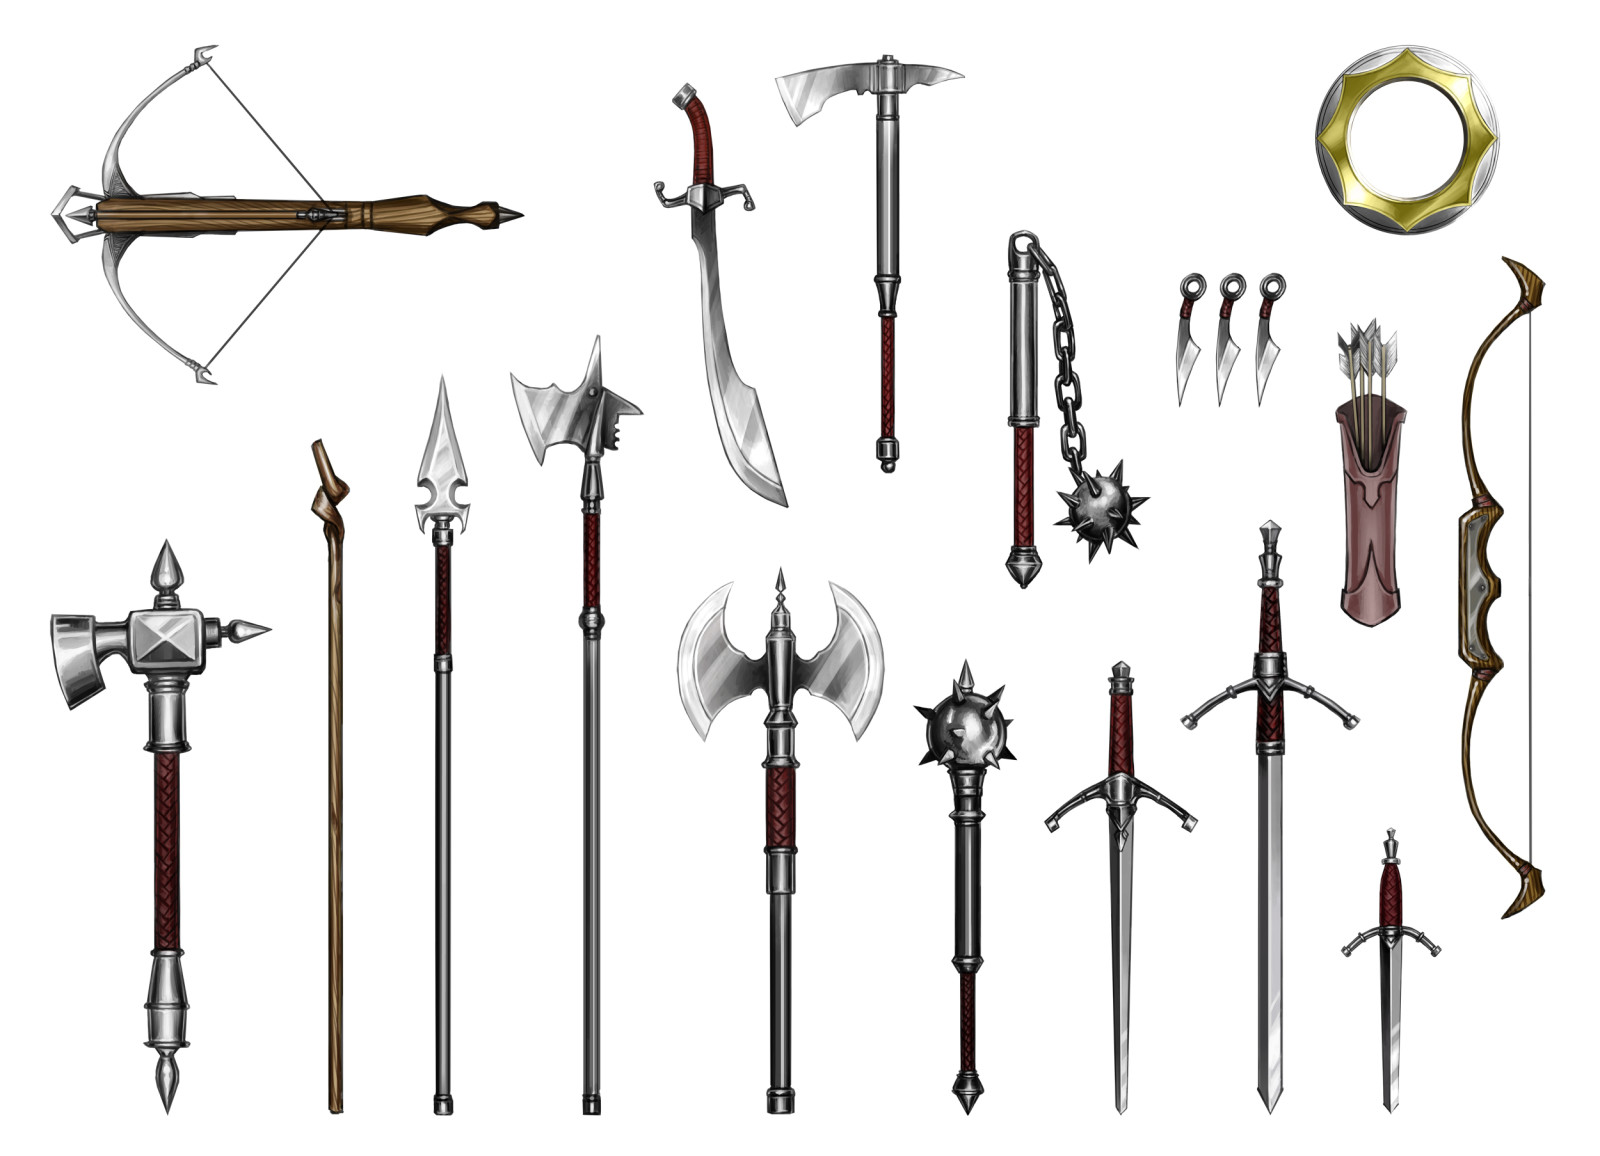 giáo, Run, Nỏ, cái chùy, halberds, con sáo, thanh kiếm dài, scimitar